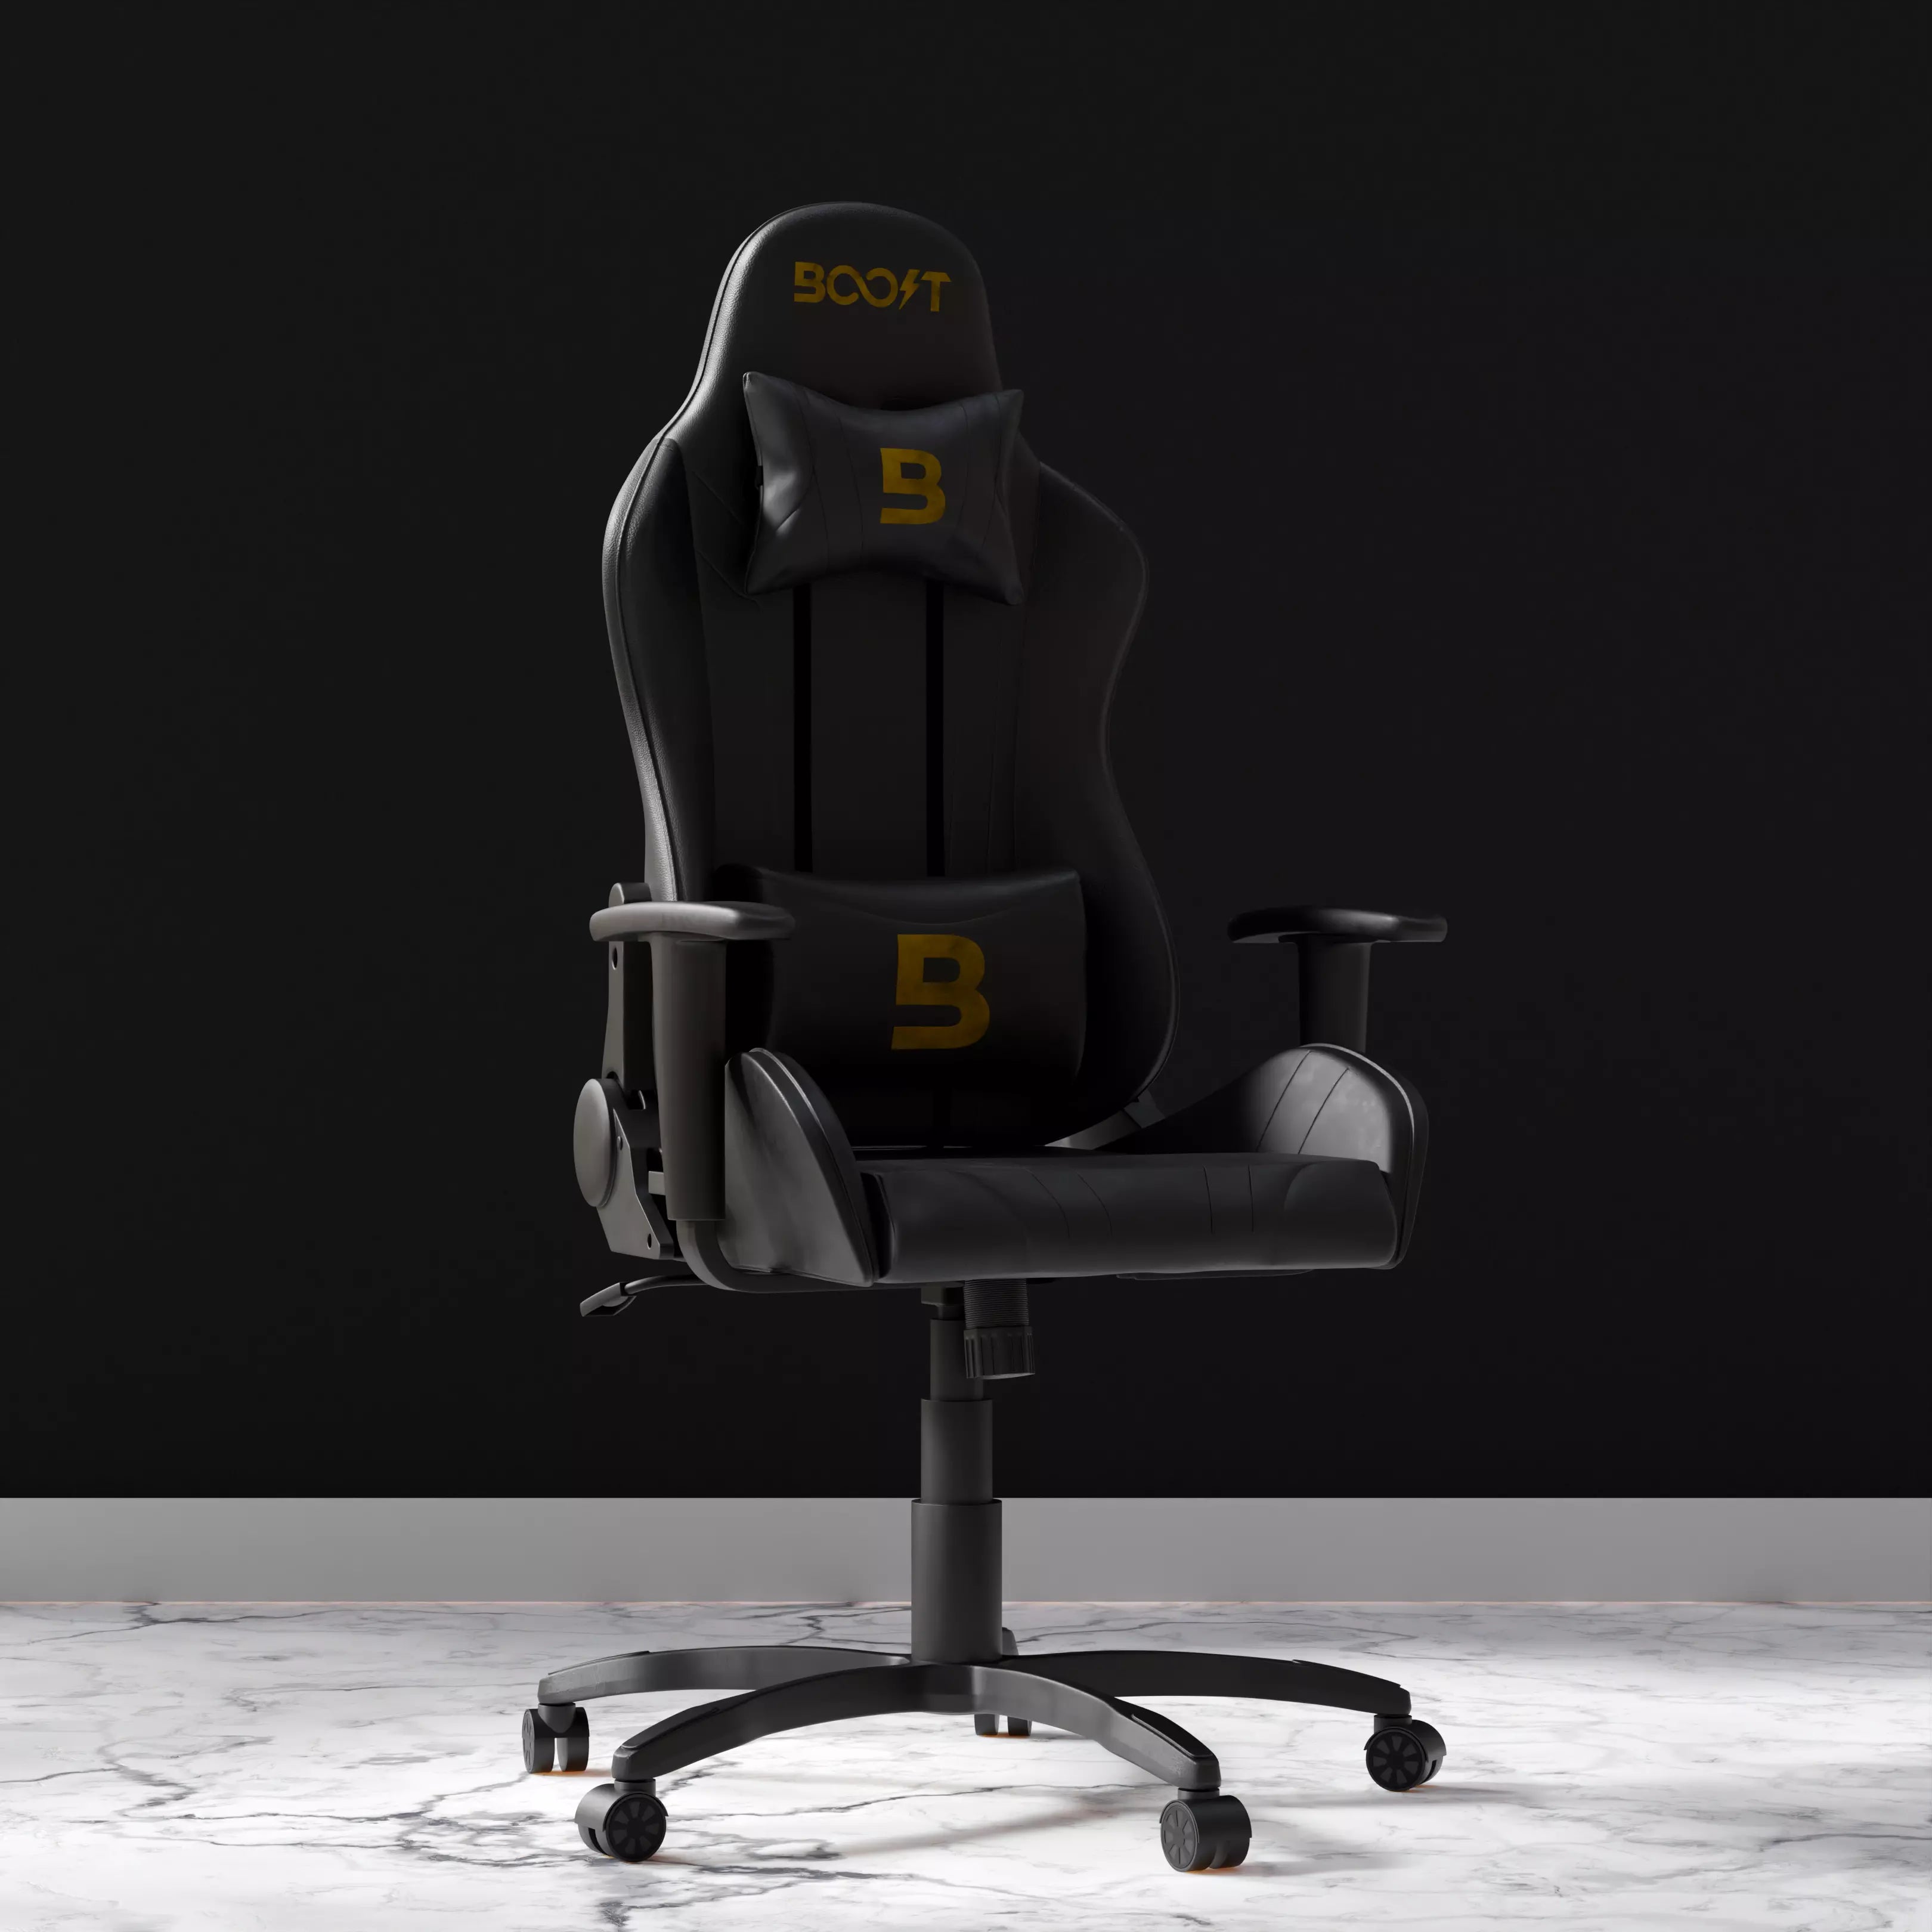 Boost Impulse Gaming Chair